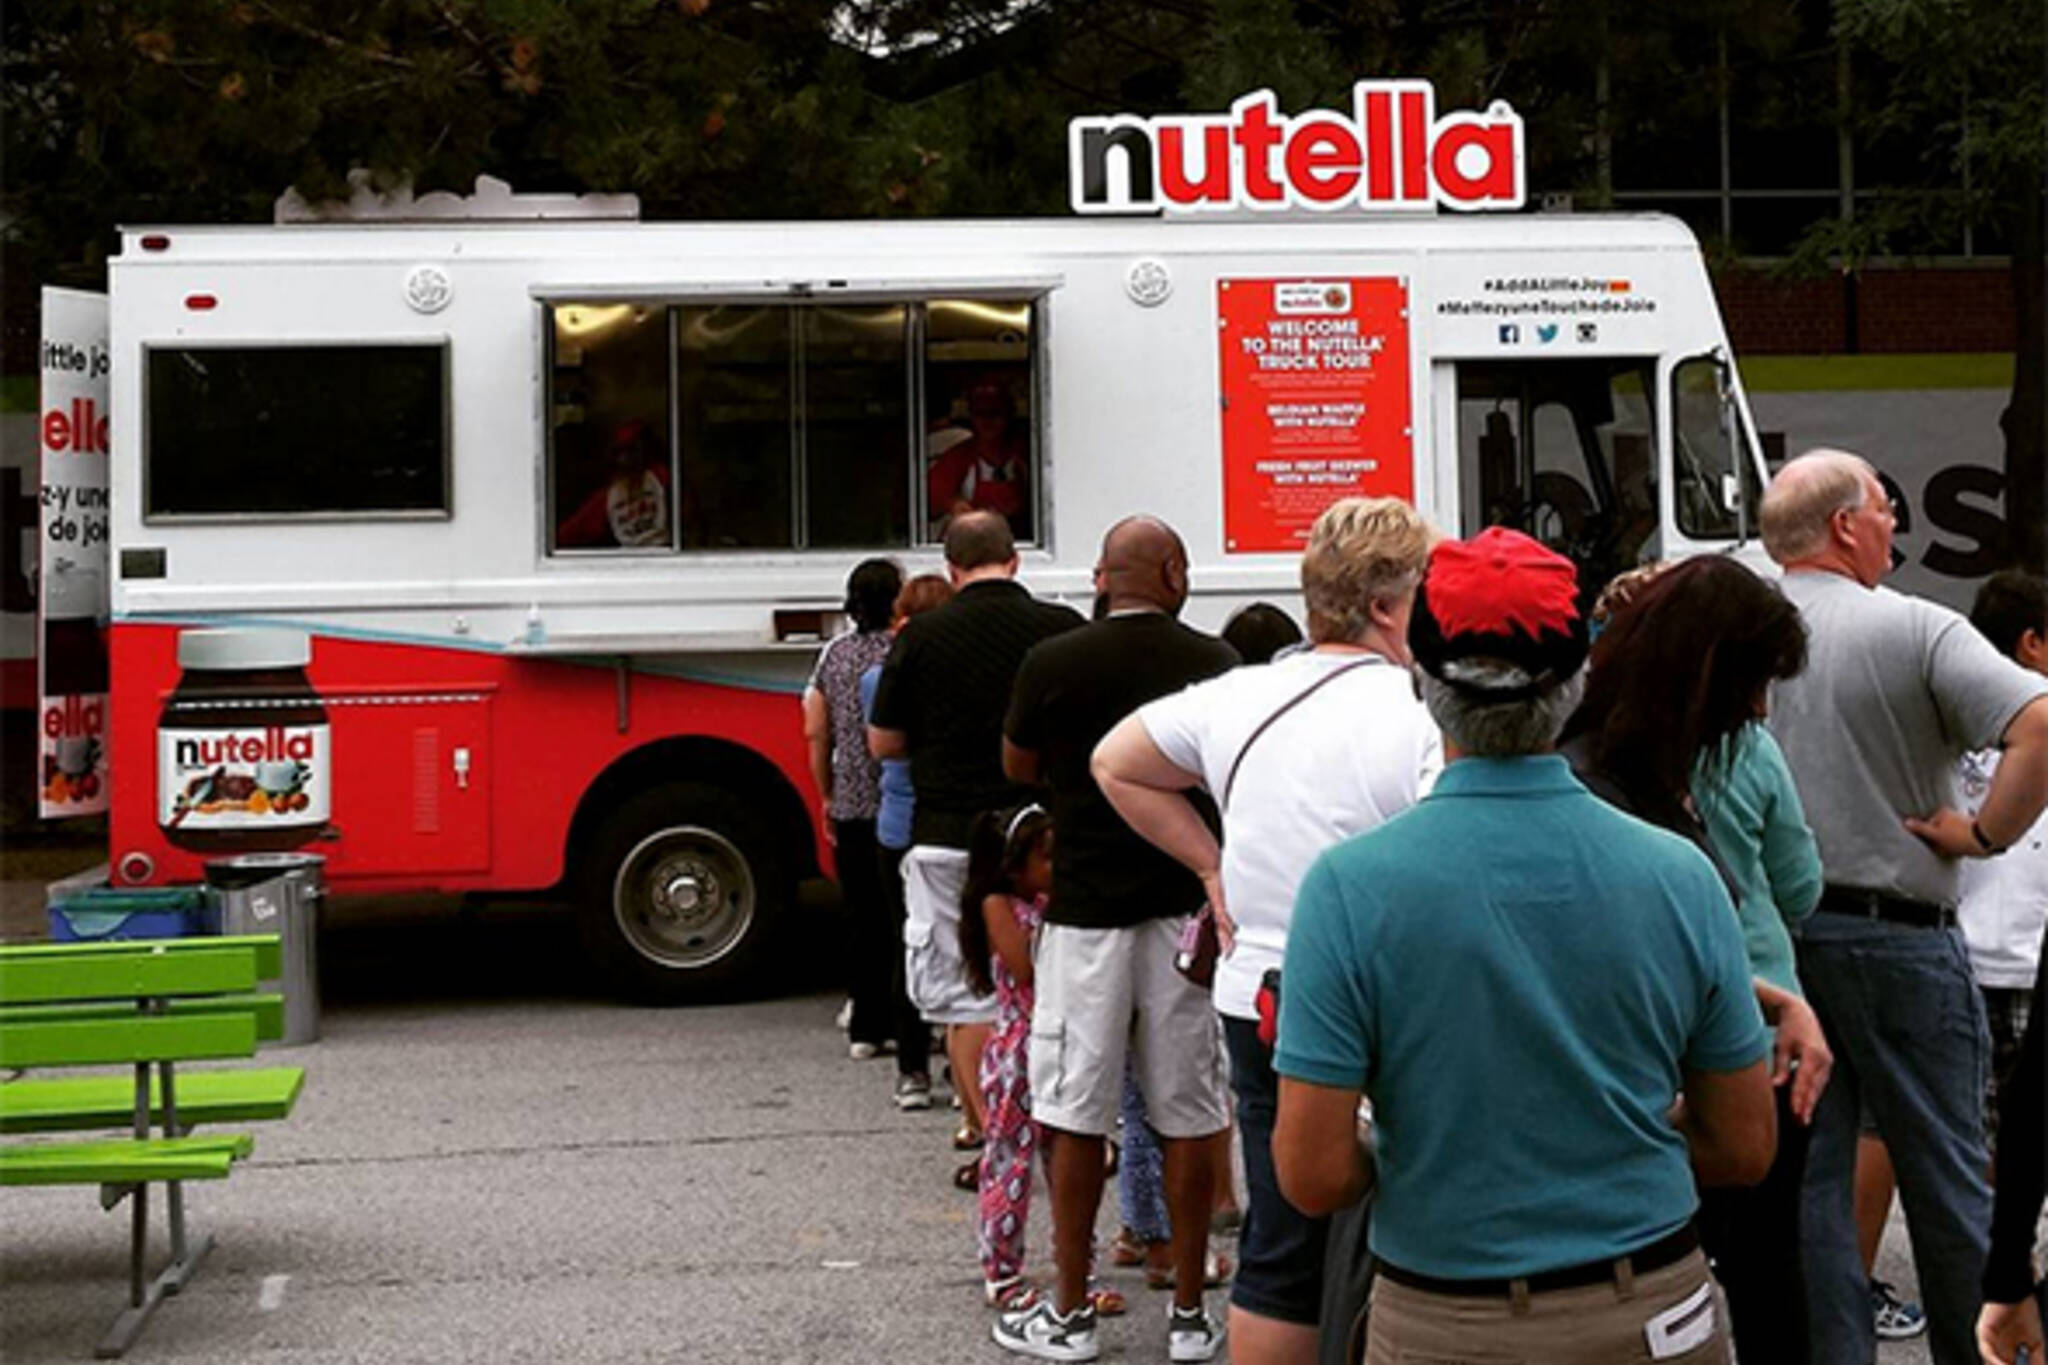 Nutella food truck